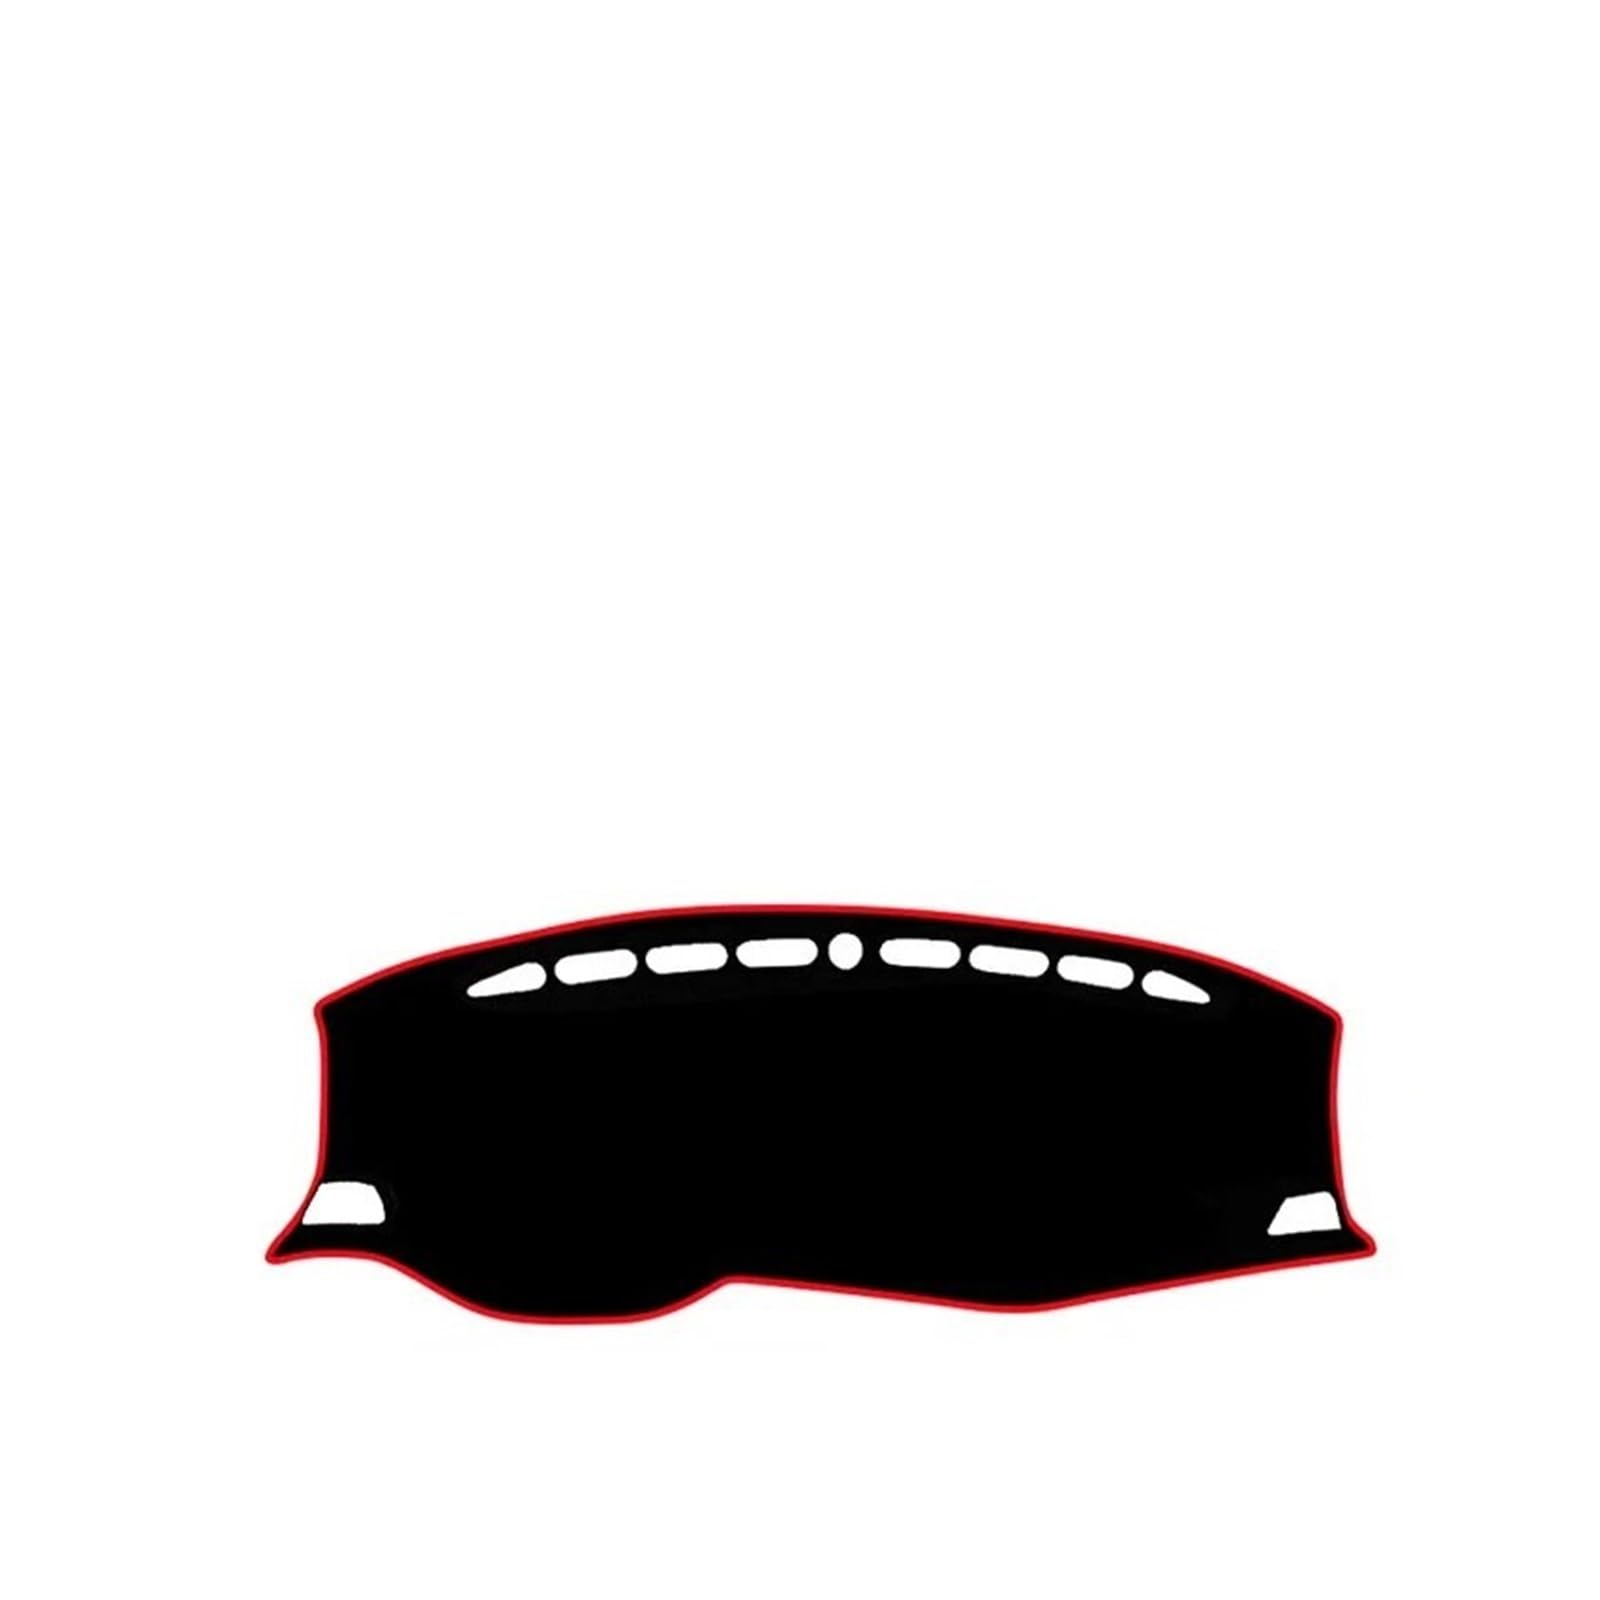 Für Changan Für CS15 2019 2020 2021 2022 2023 Auto Armaturenbrett Abdeckung Matten Armaturenbrett Sonnenschutz Pad Fall Armaturenbrett Abdeckung Dashmat(A Red Side) von HONGYISM